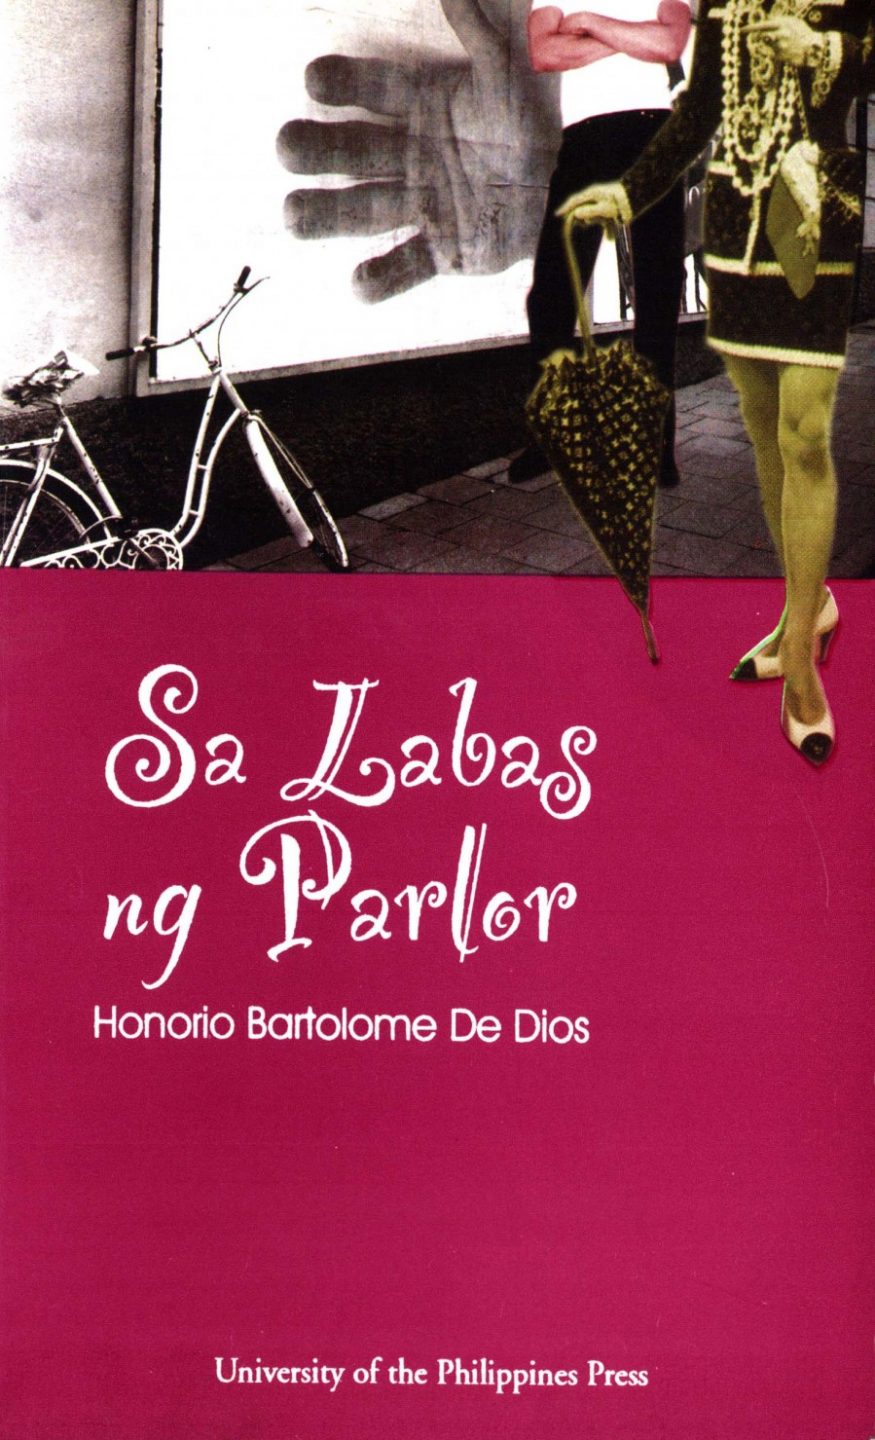 Filipino literature: "Geyluv" by Honorio Bartolome de Dios